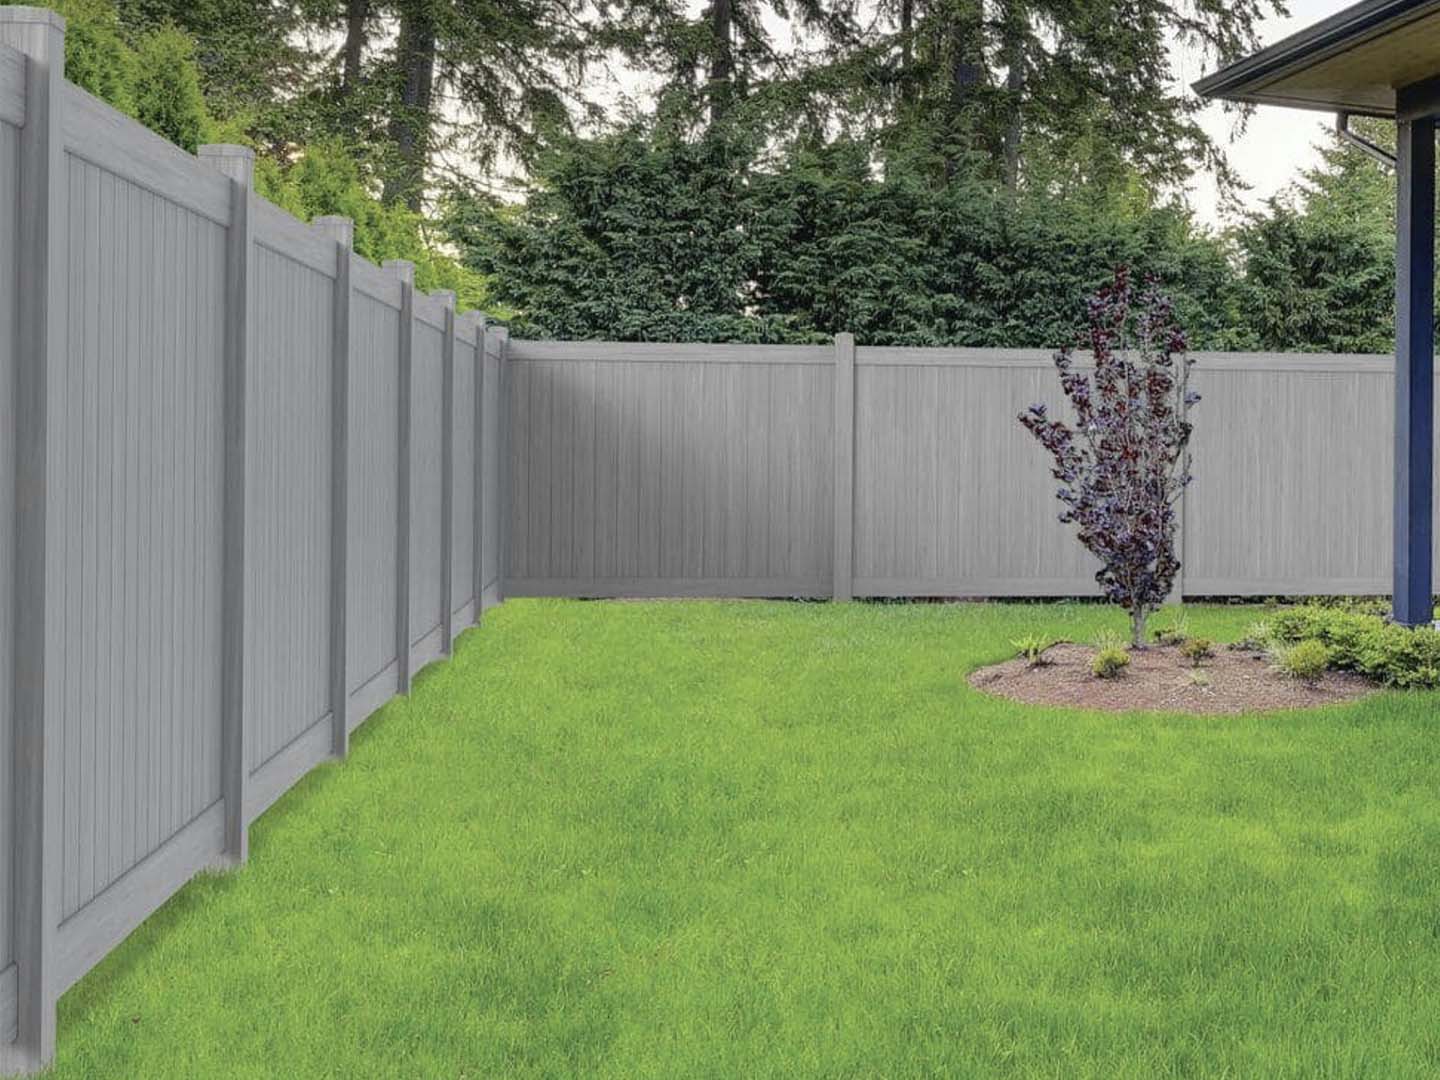 Photo of a Lufkin TX vinyl fence